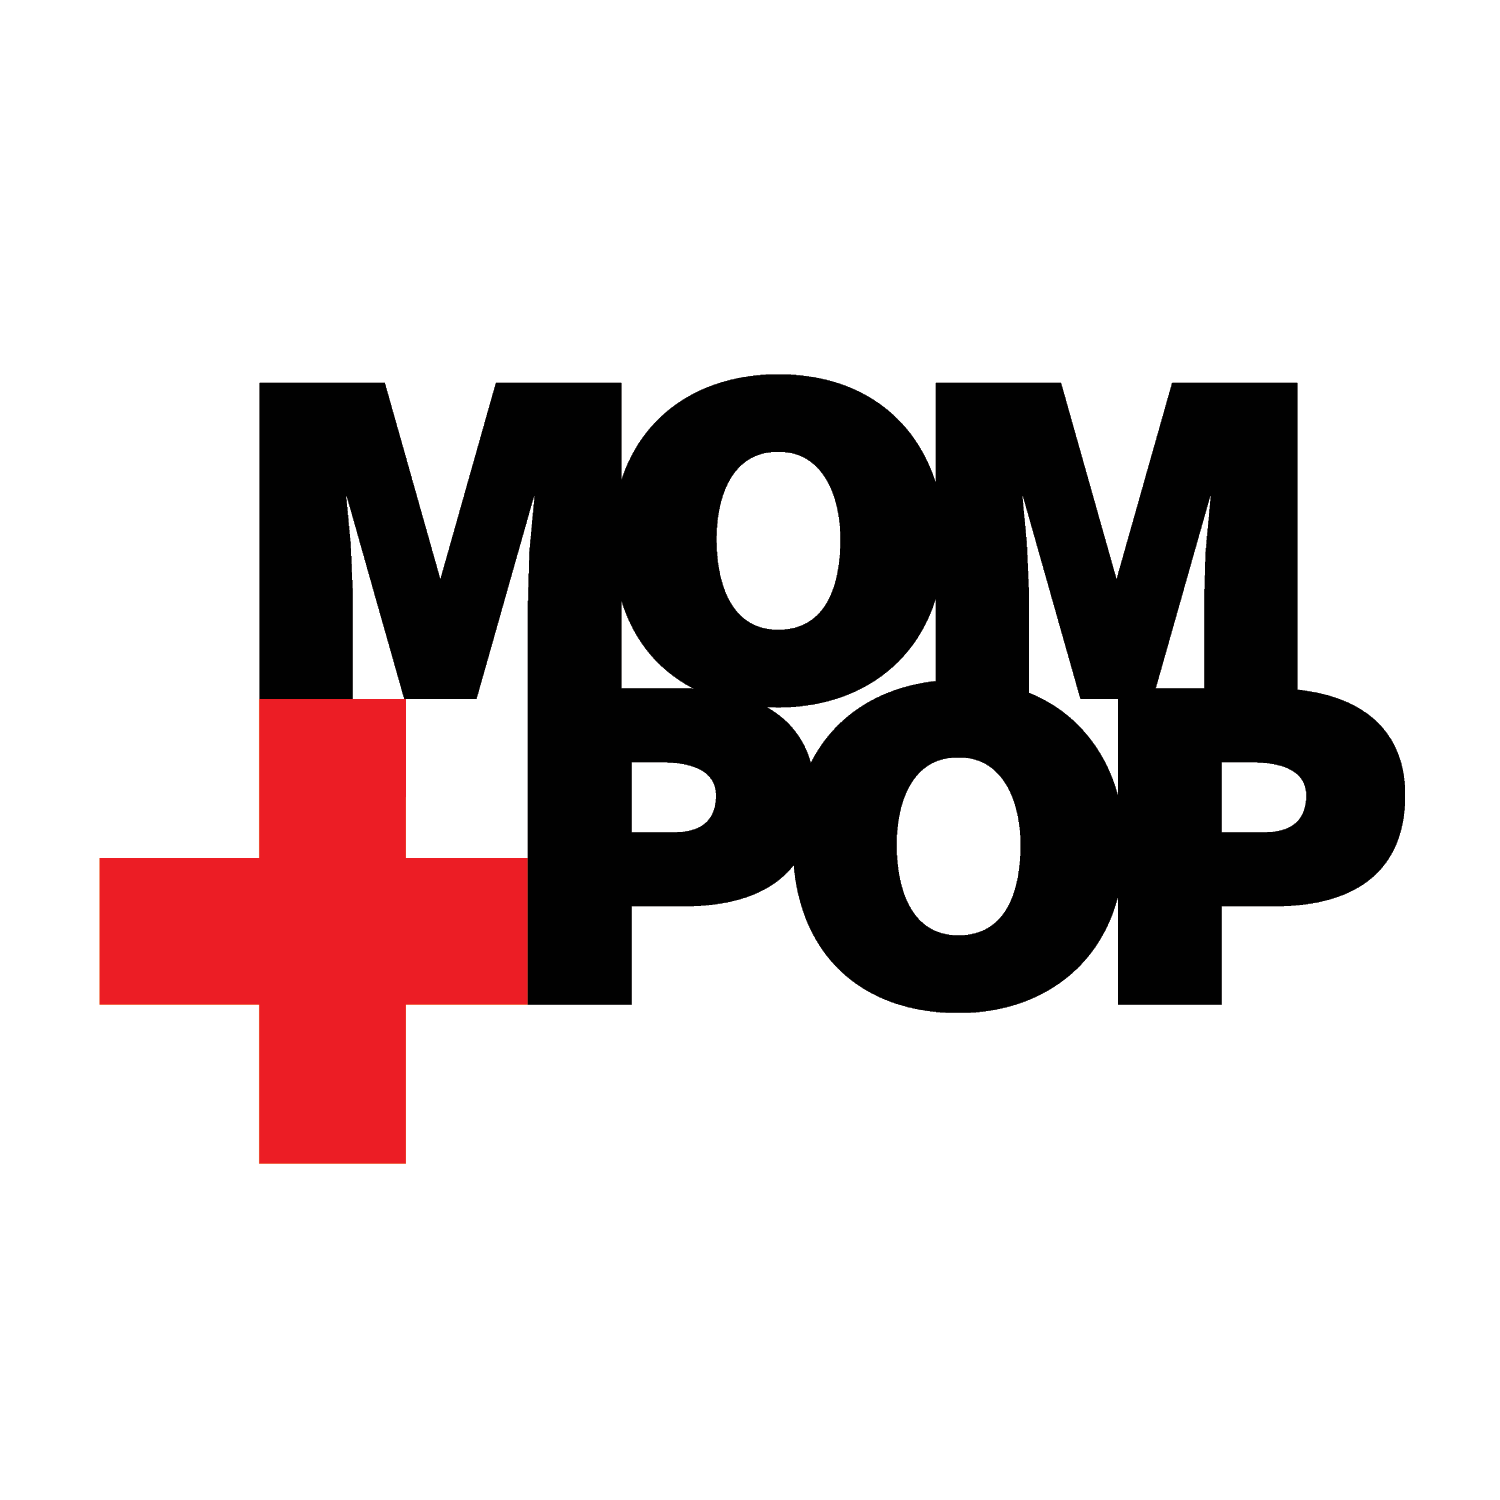 Mom+Pop Music